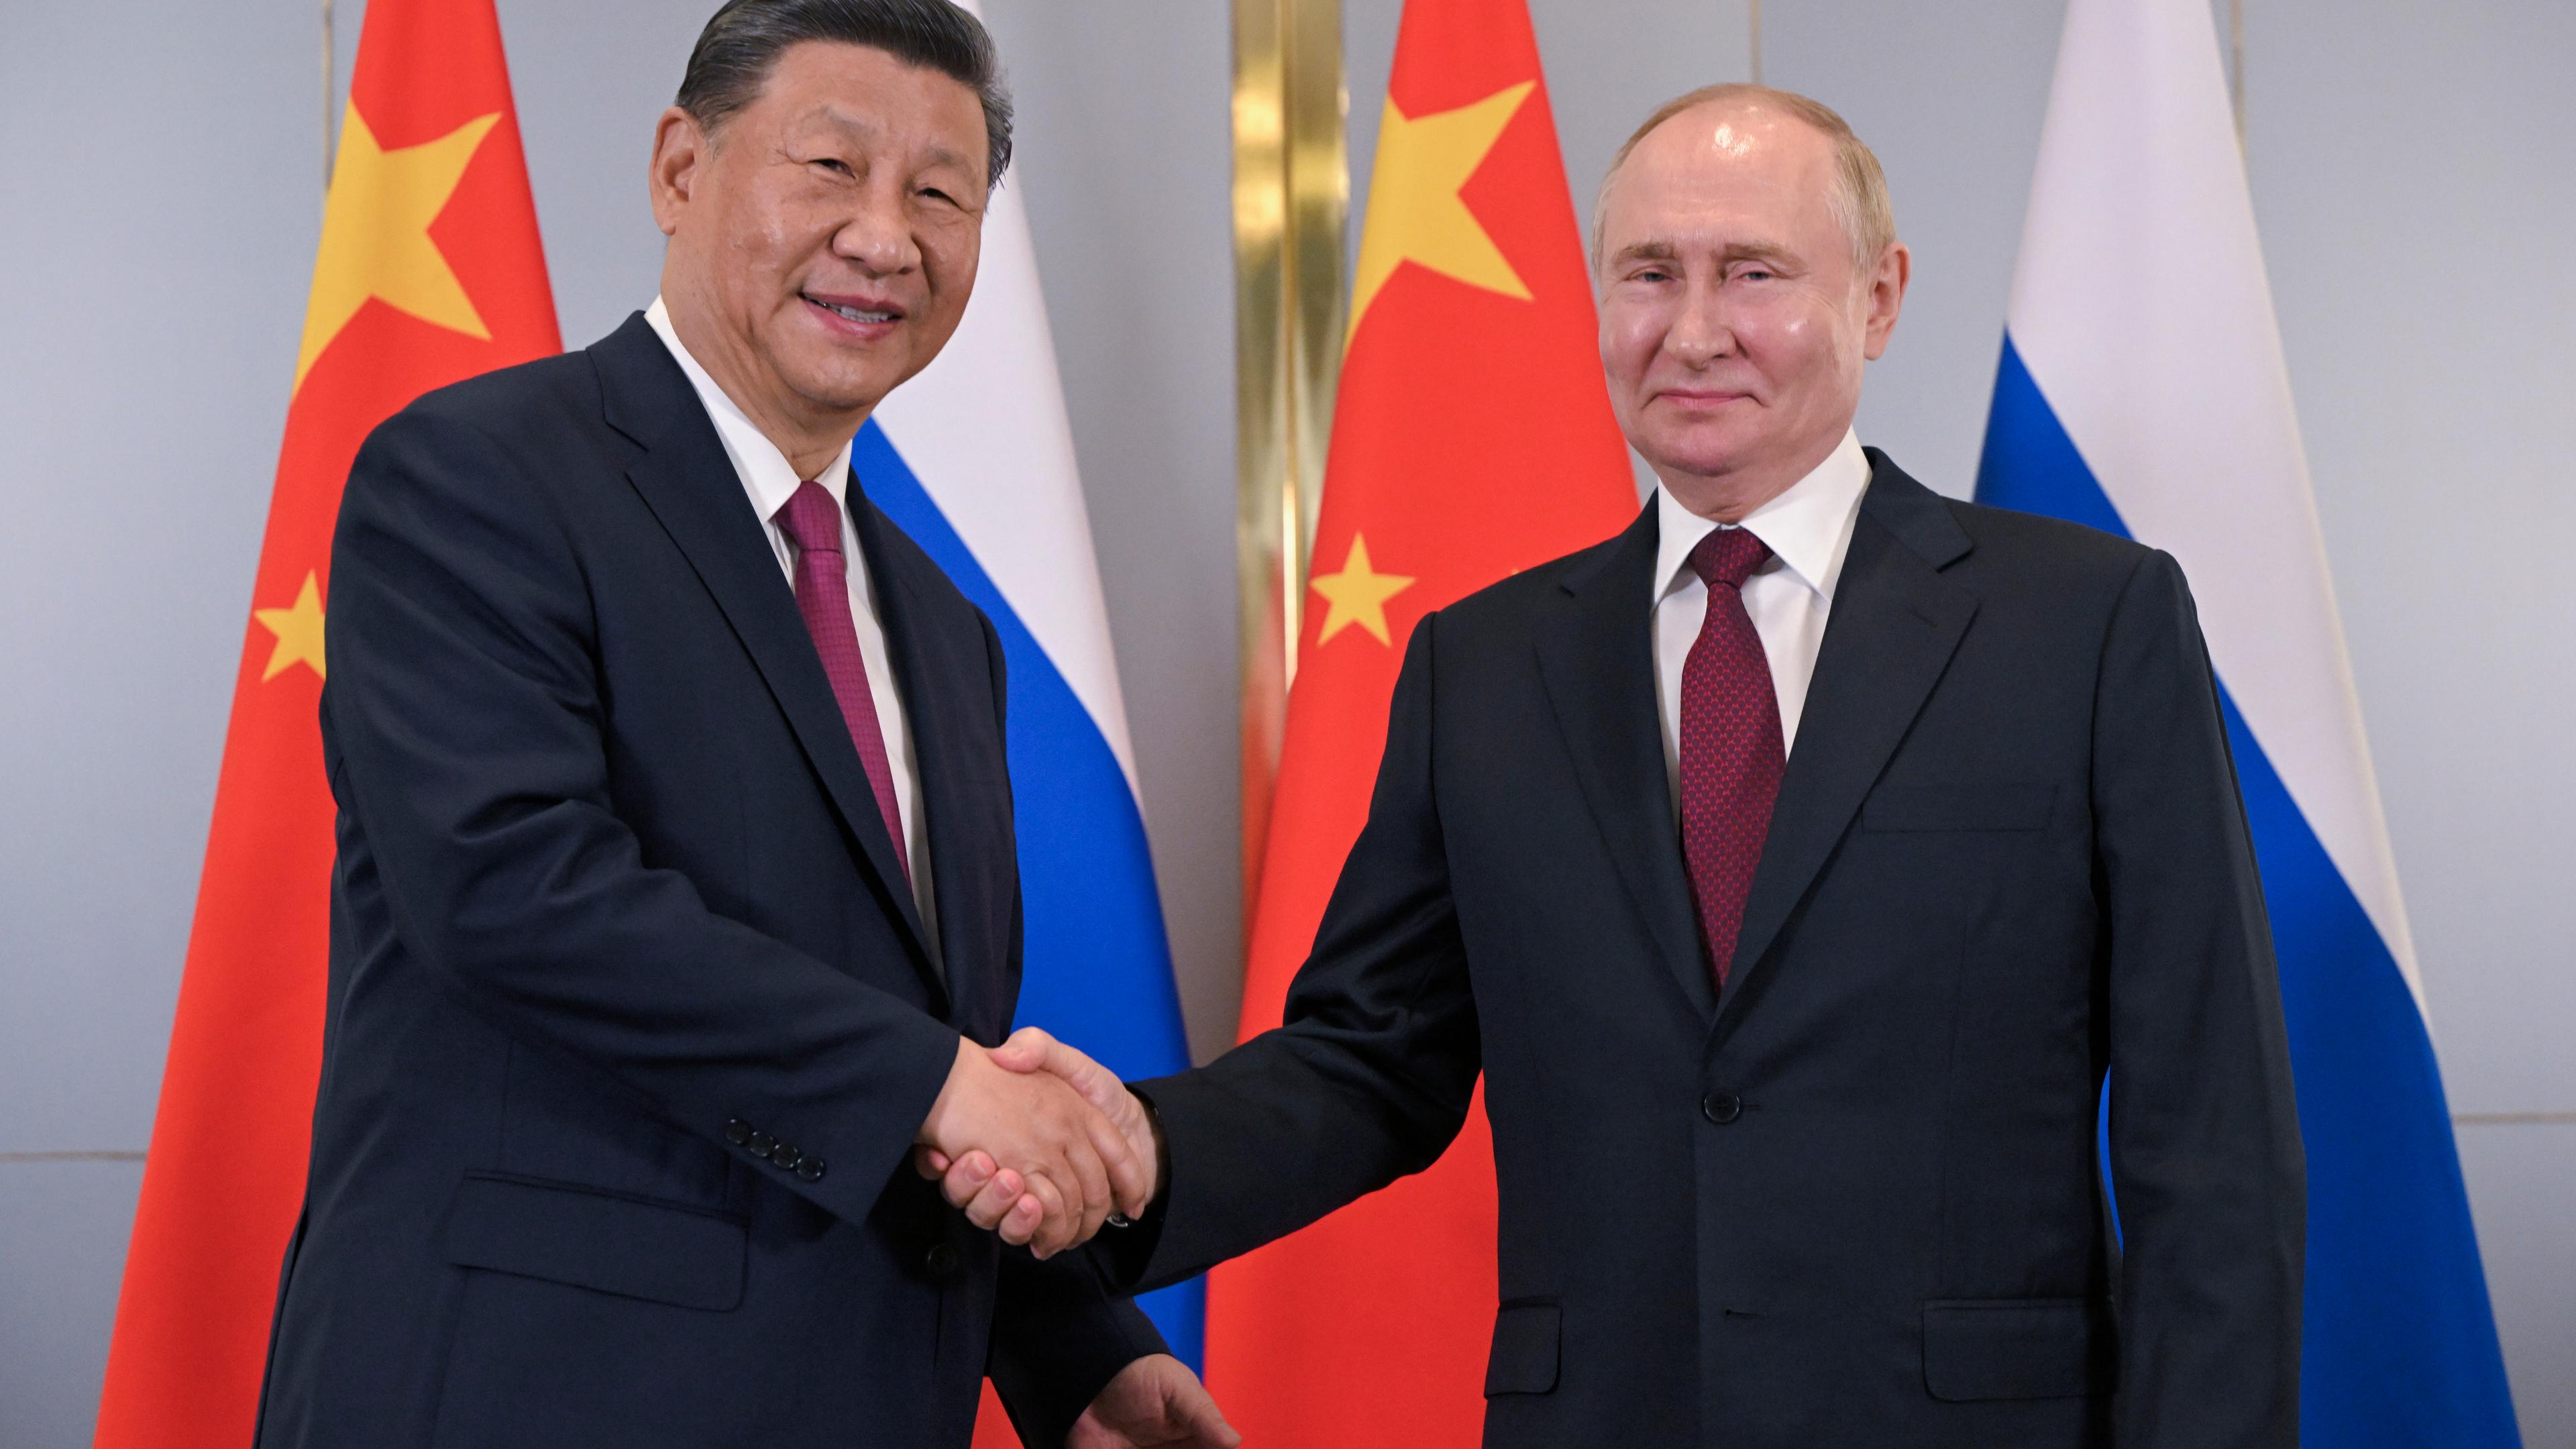 Russian President Vladimir Putin, right, and Chinese President Xi Jinping shake hands 